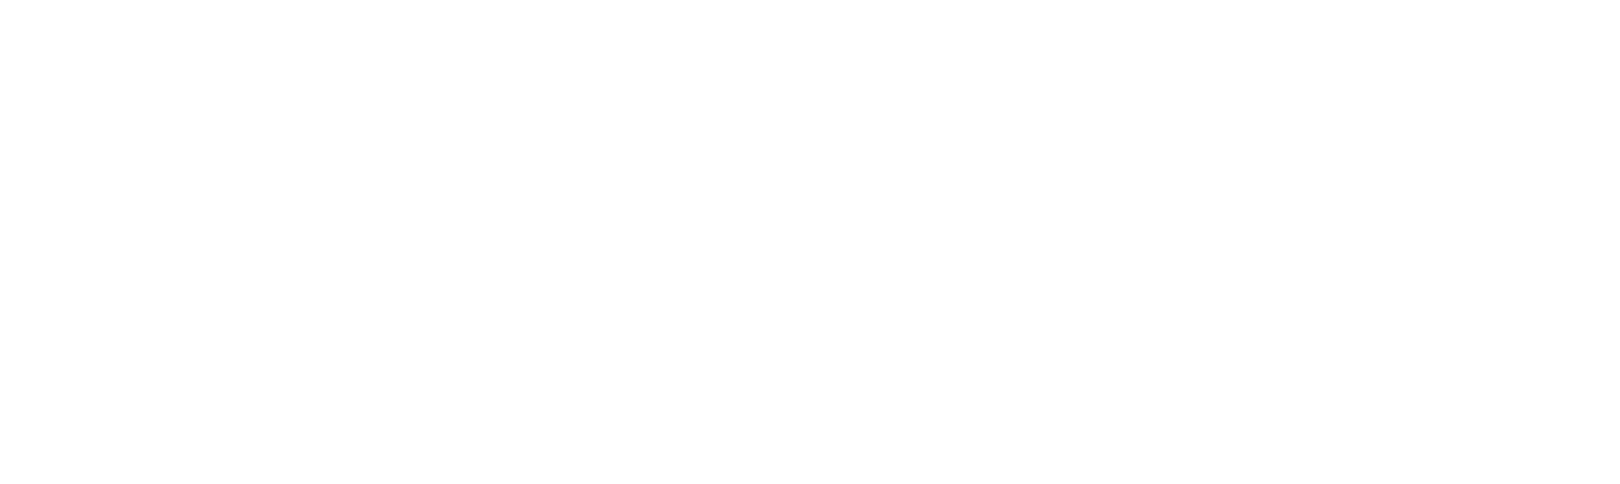 urbanbubble logo_landscape_white-2